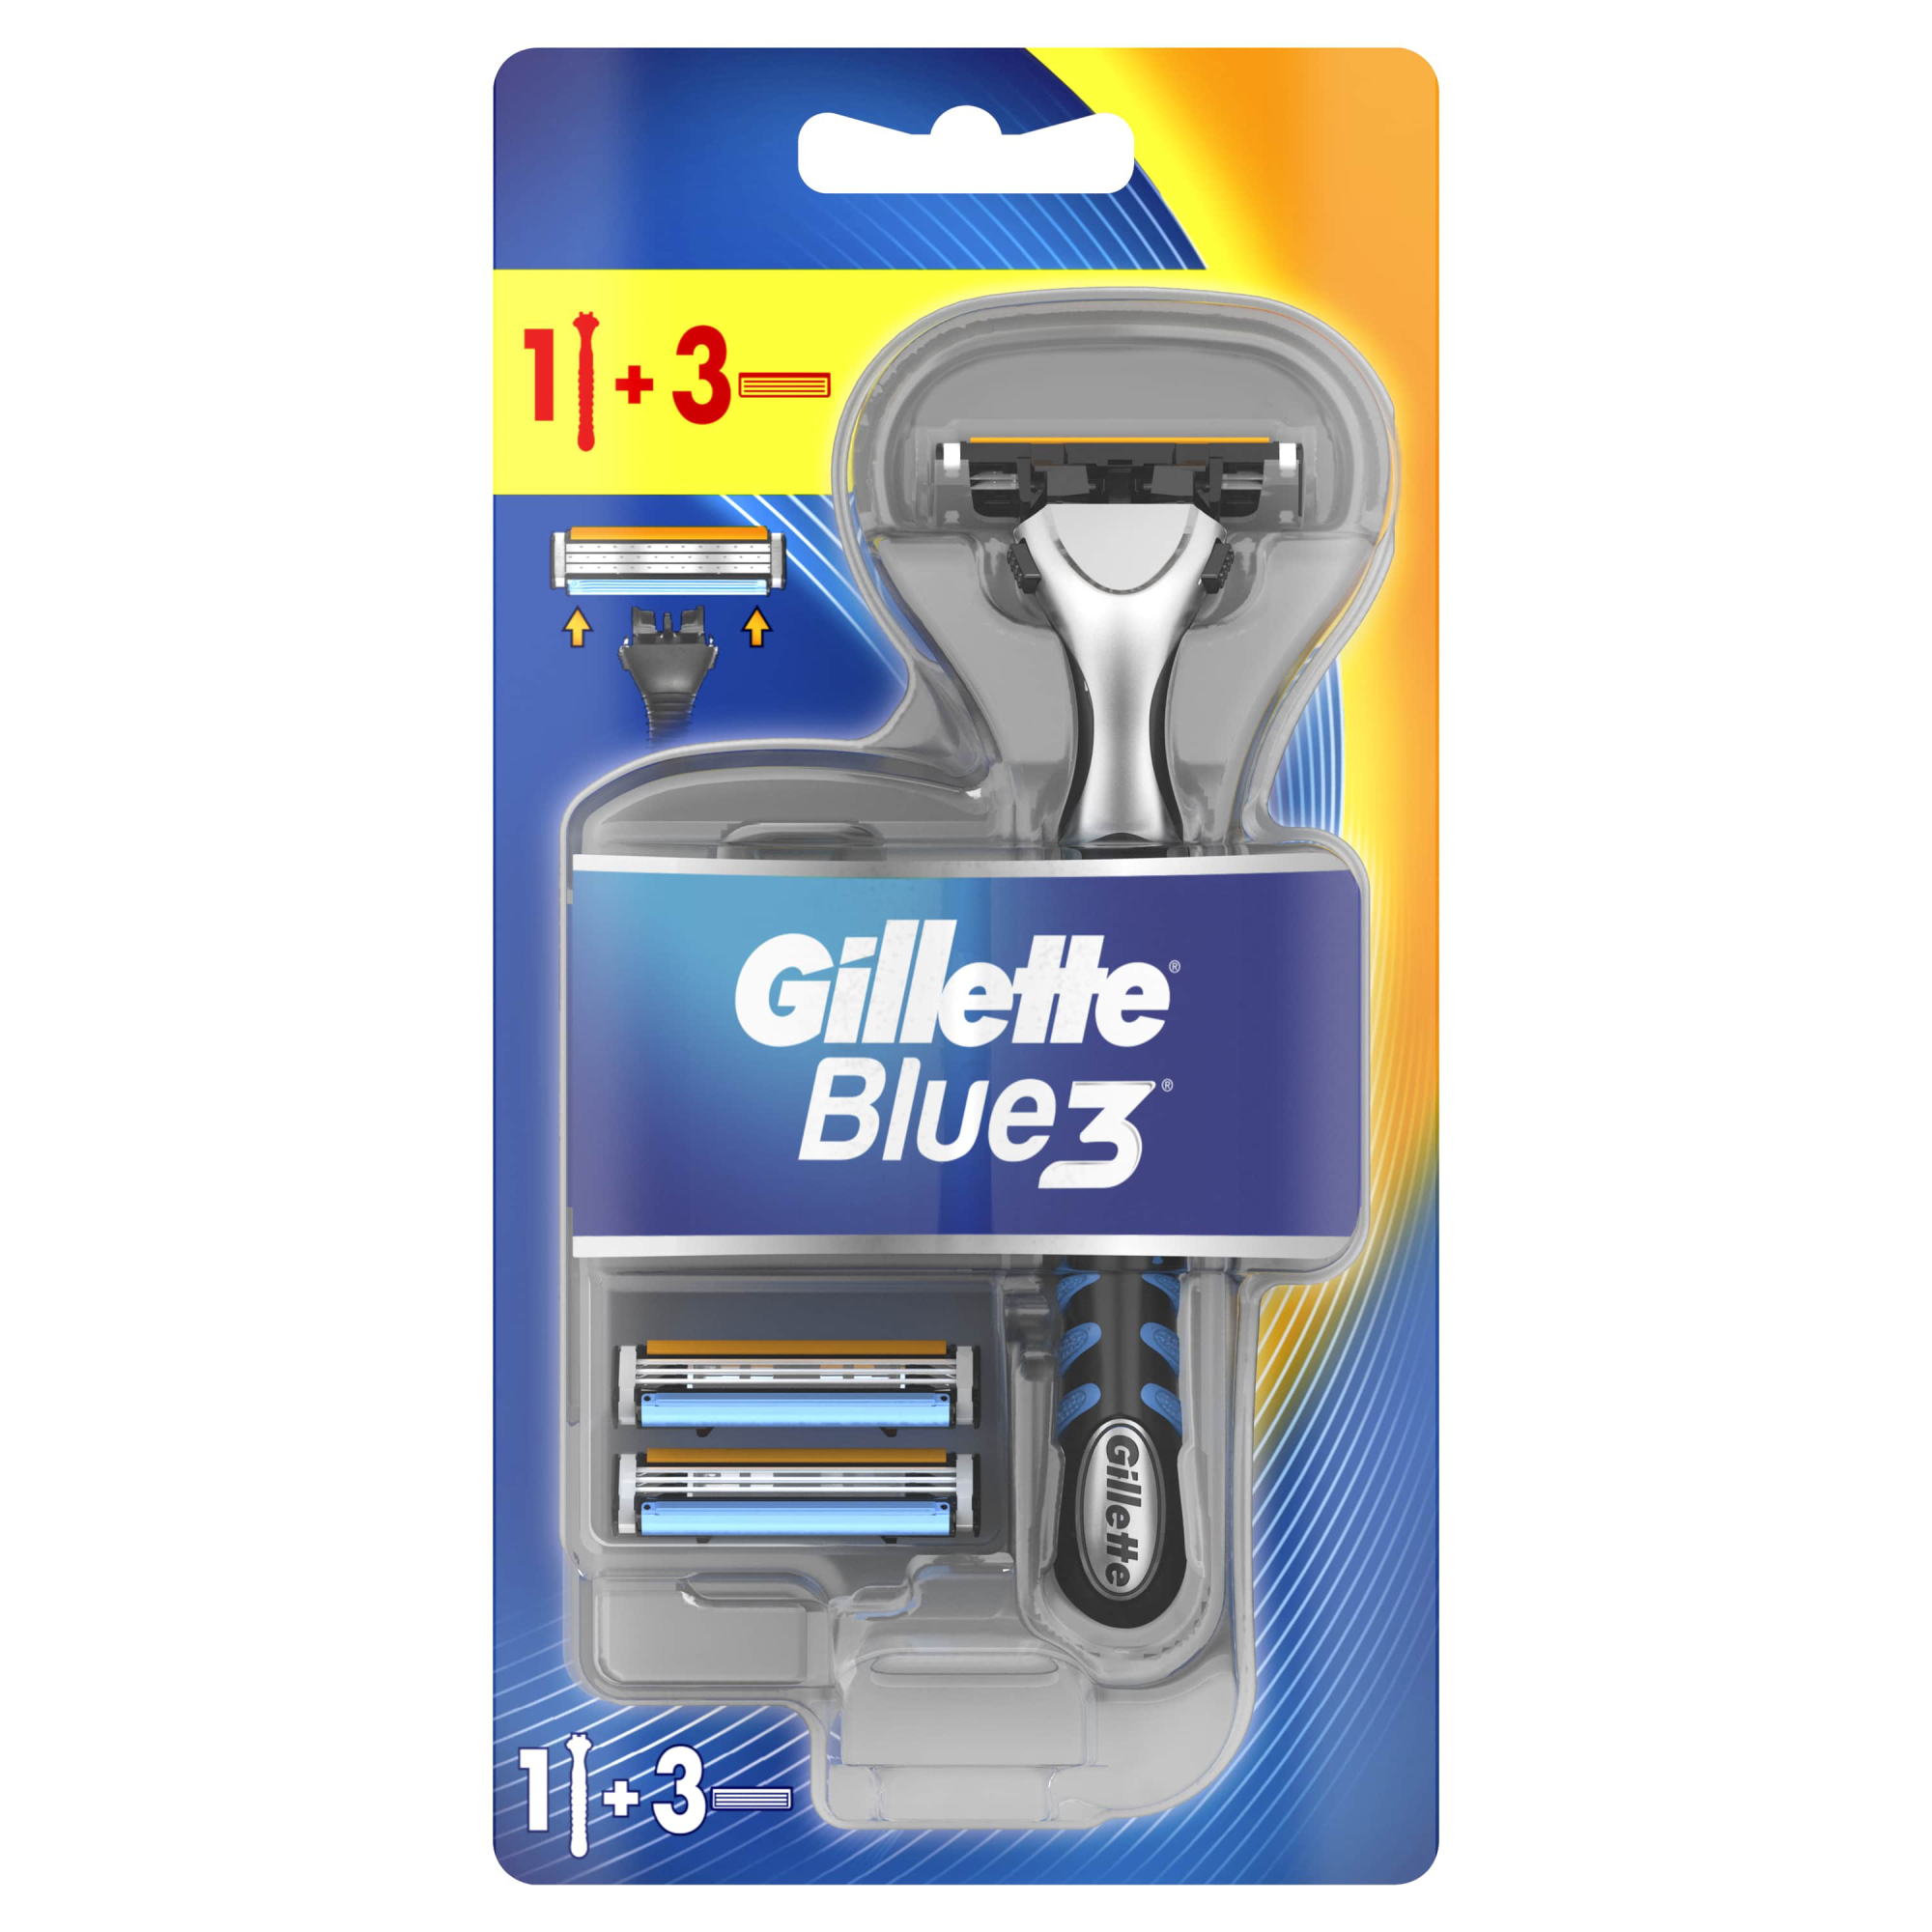 Мужская бритва Gillette Blue3, 3 кассеты, с 3 лезвиями, плавающая головка бритва бердск 3381а